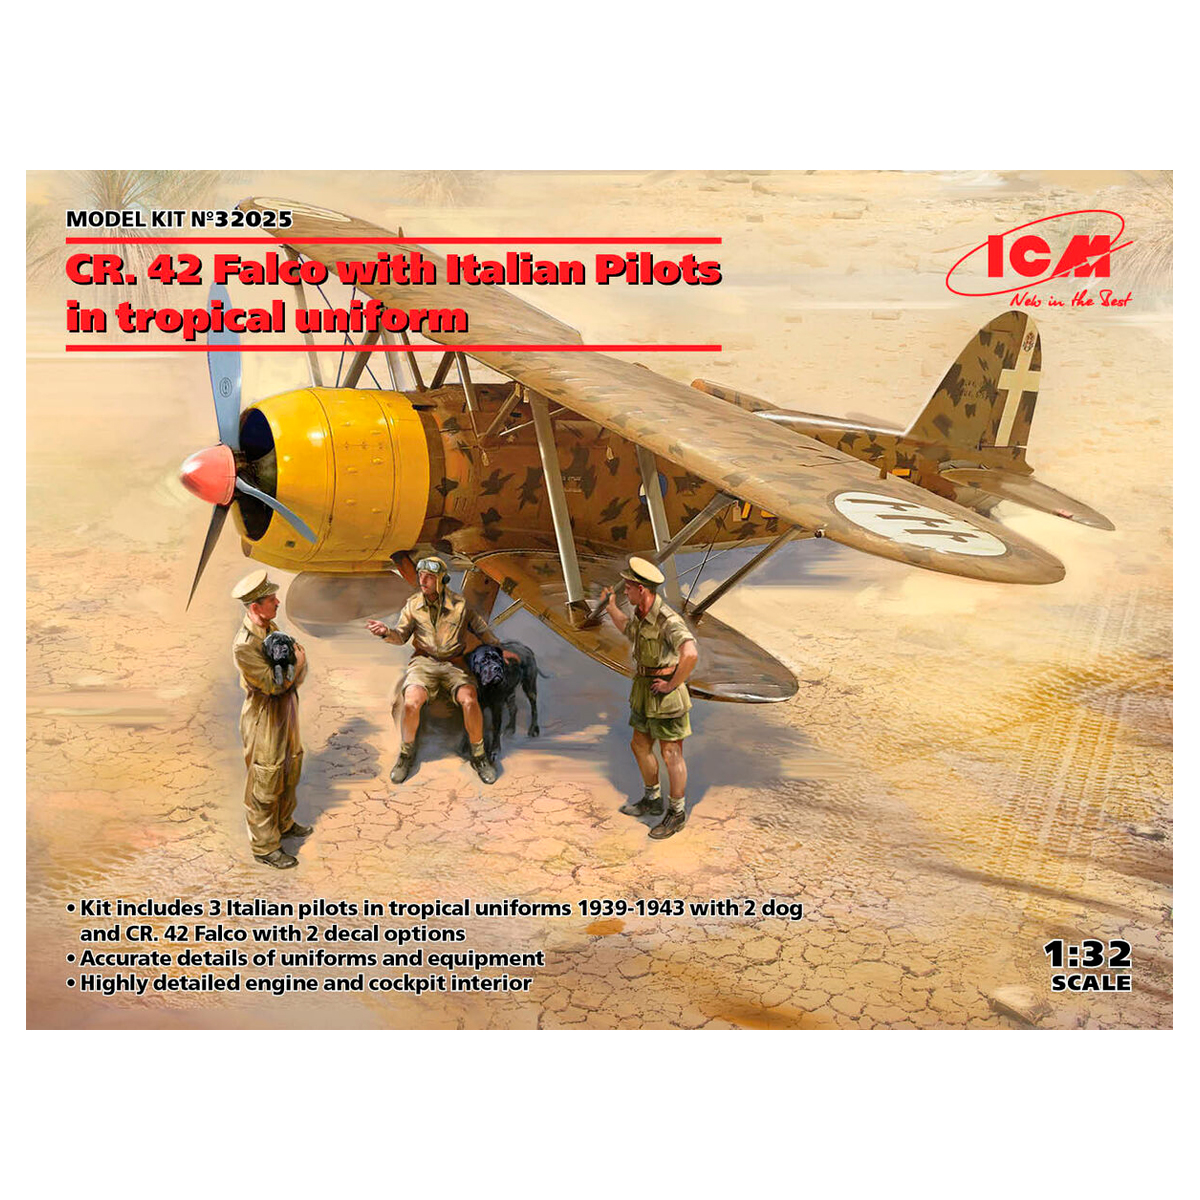 CR. 42 Falco with Italian Pilots in tropical uniform 1/32